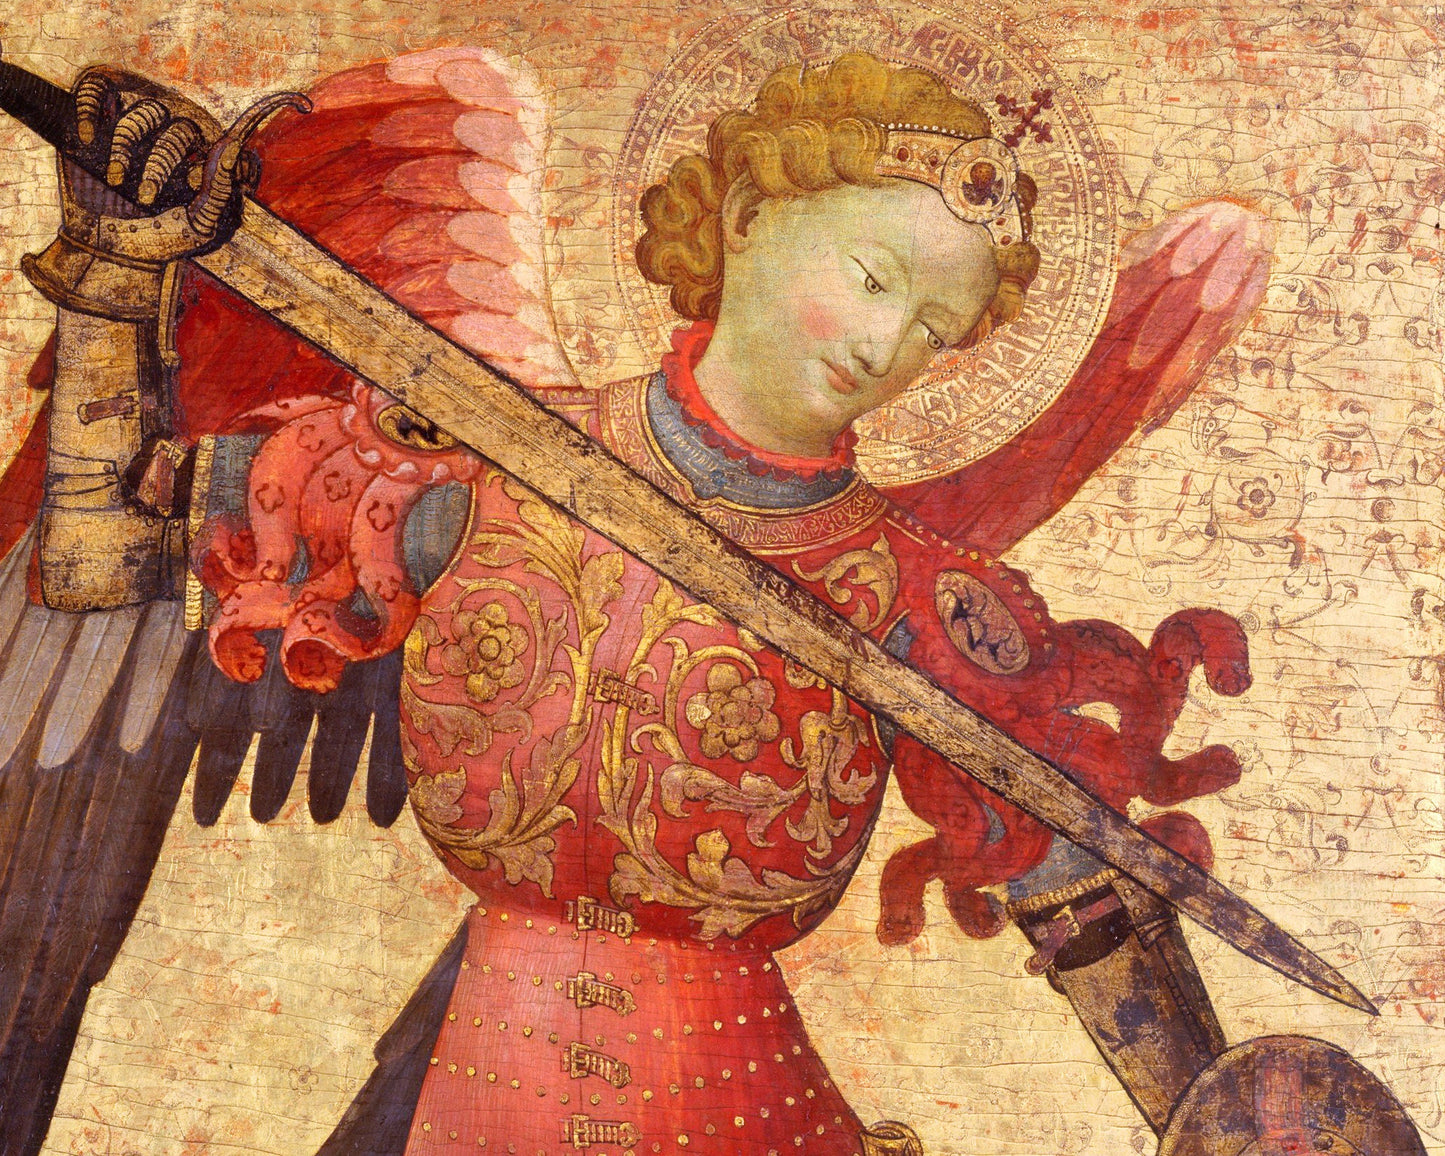 Vintage knight art | St. Michael & 7 headed apocalyptic dragon | Medieval history | Fantasy wall art | Antique beastiary | Spanish artist